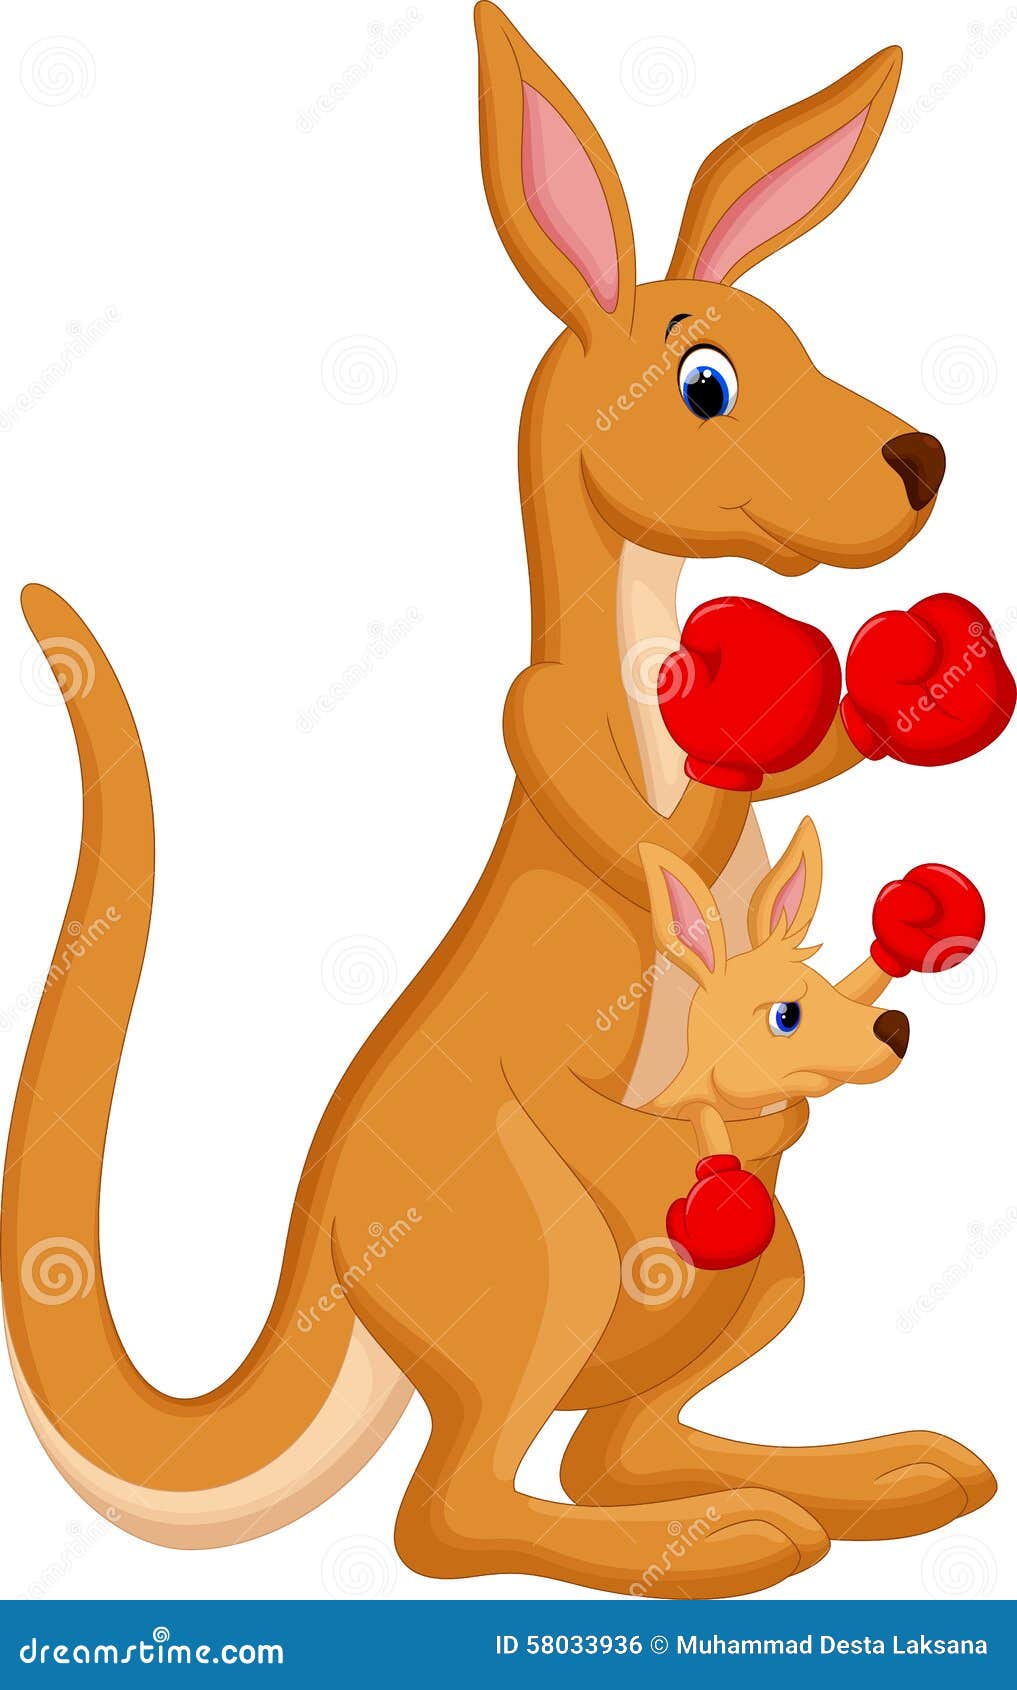 boxing kangaroo clipart - photo #11